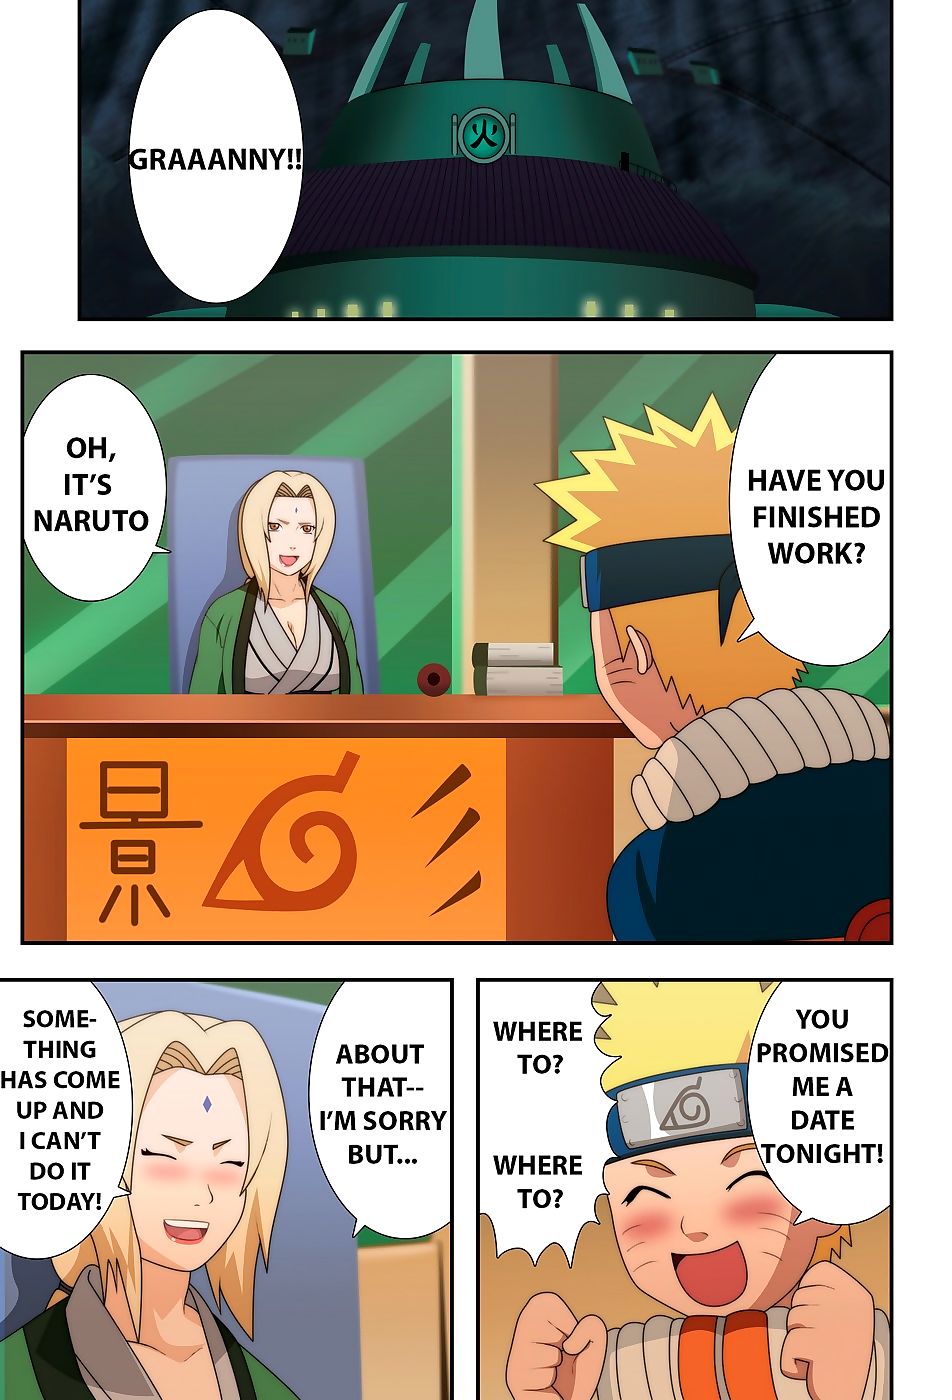 Naruto chichikage groot borst Ninja page 1